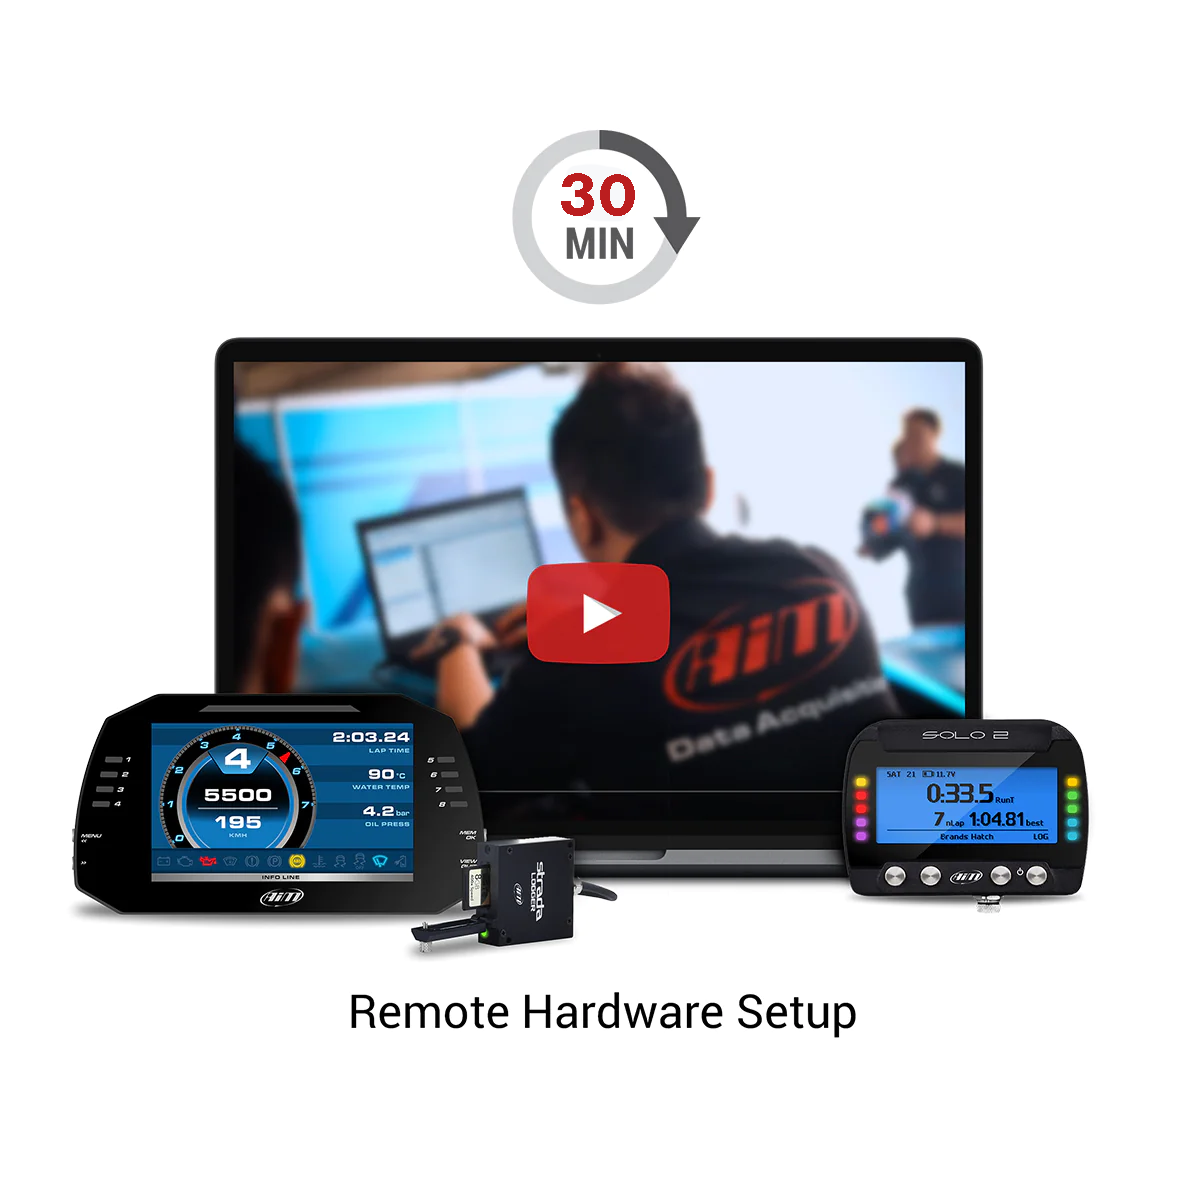 30 min Remote Hardware Setup - AimShop.com